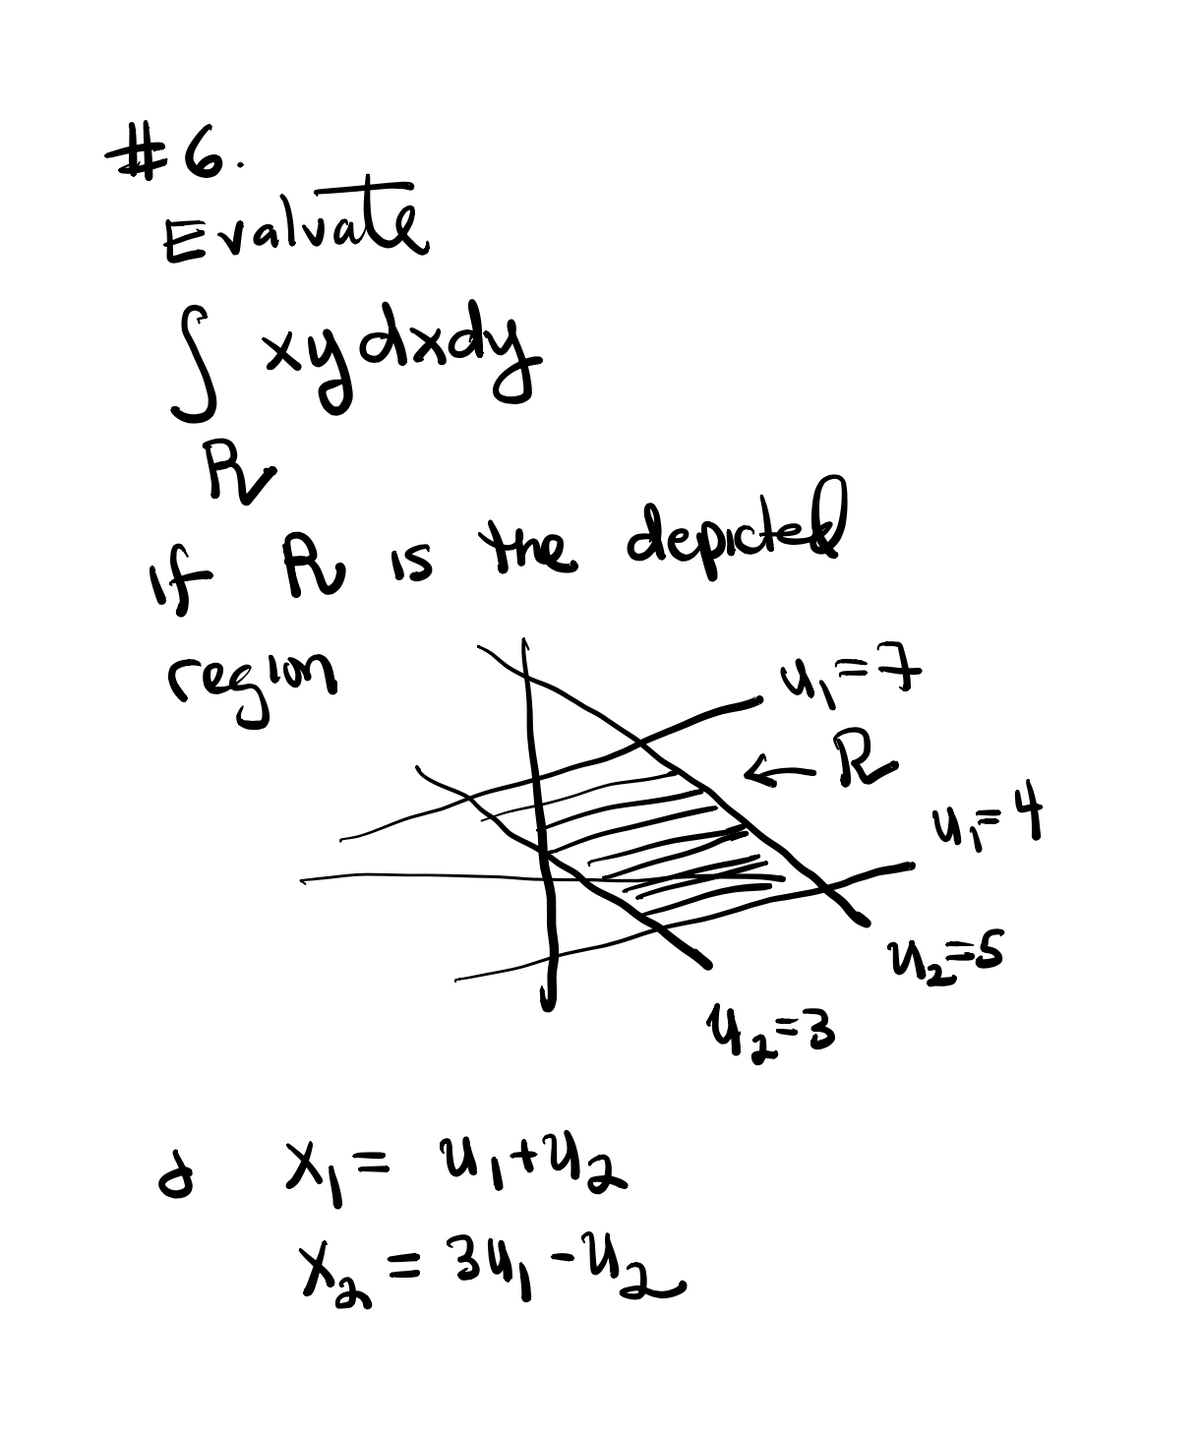 #6.
Evalvate
s xydxcy
R
if Ru is the depicted
IS
reglon
d X, = U,+U2
Xy = 34, -U2
